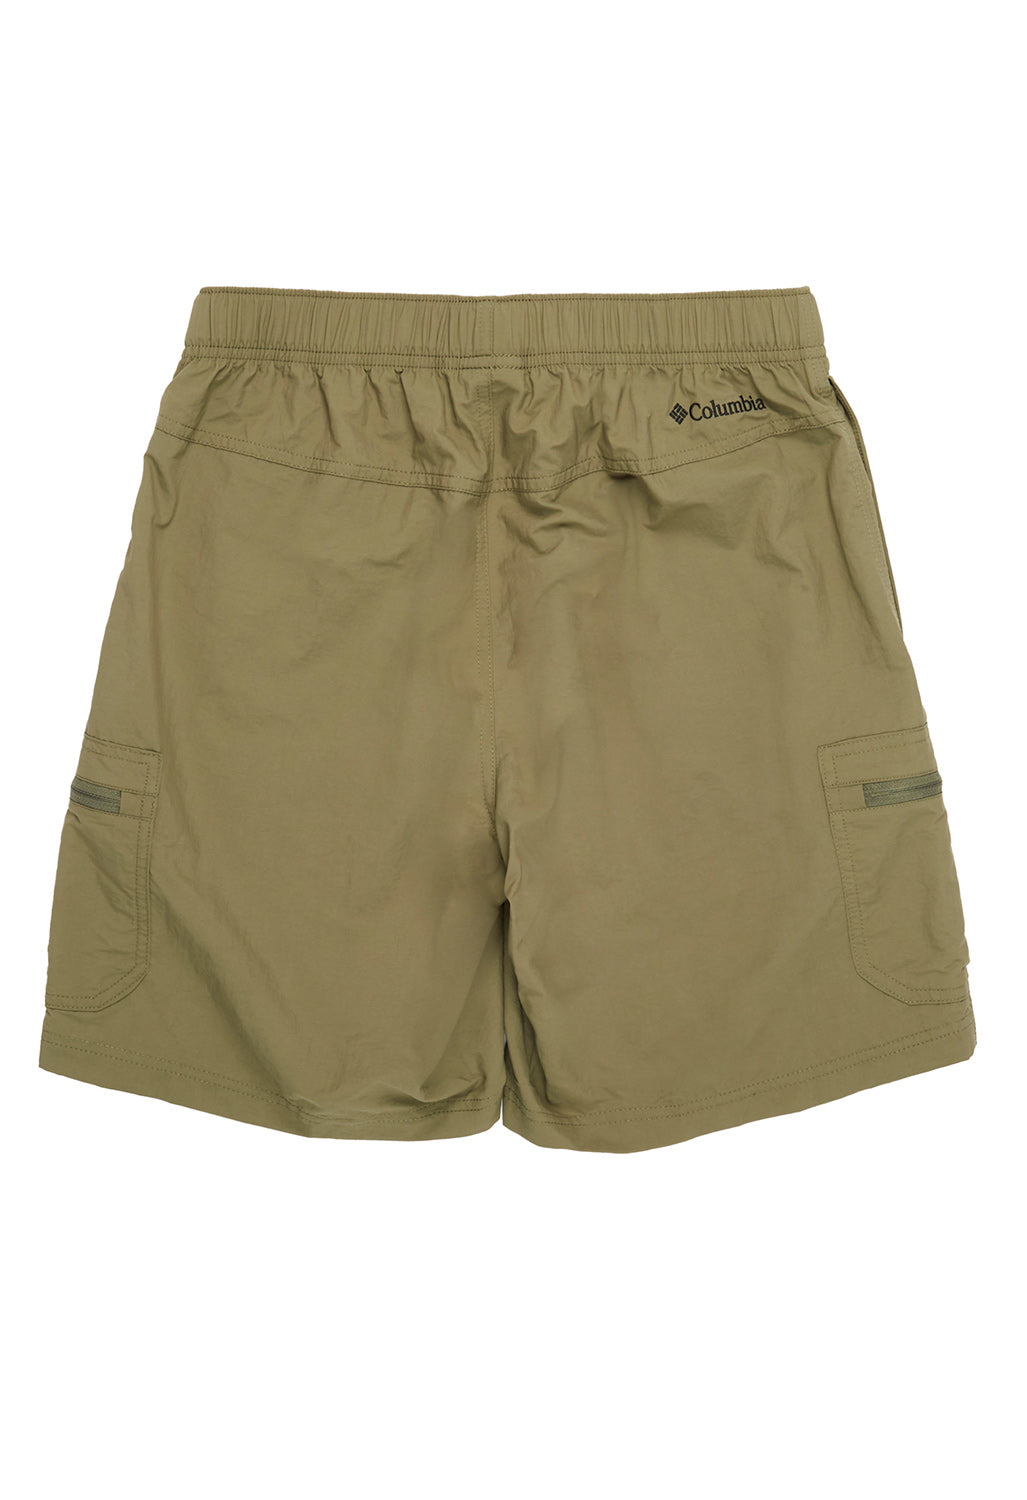 Columbia Men's Mountaindale Shorts - Stone Green